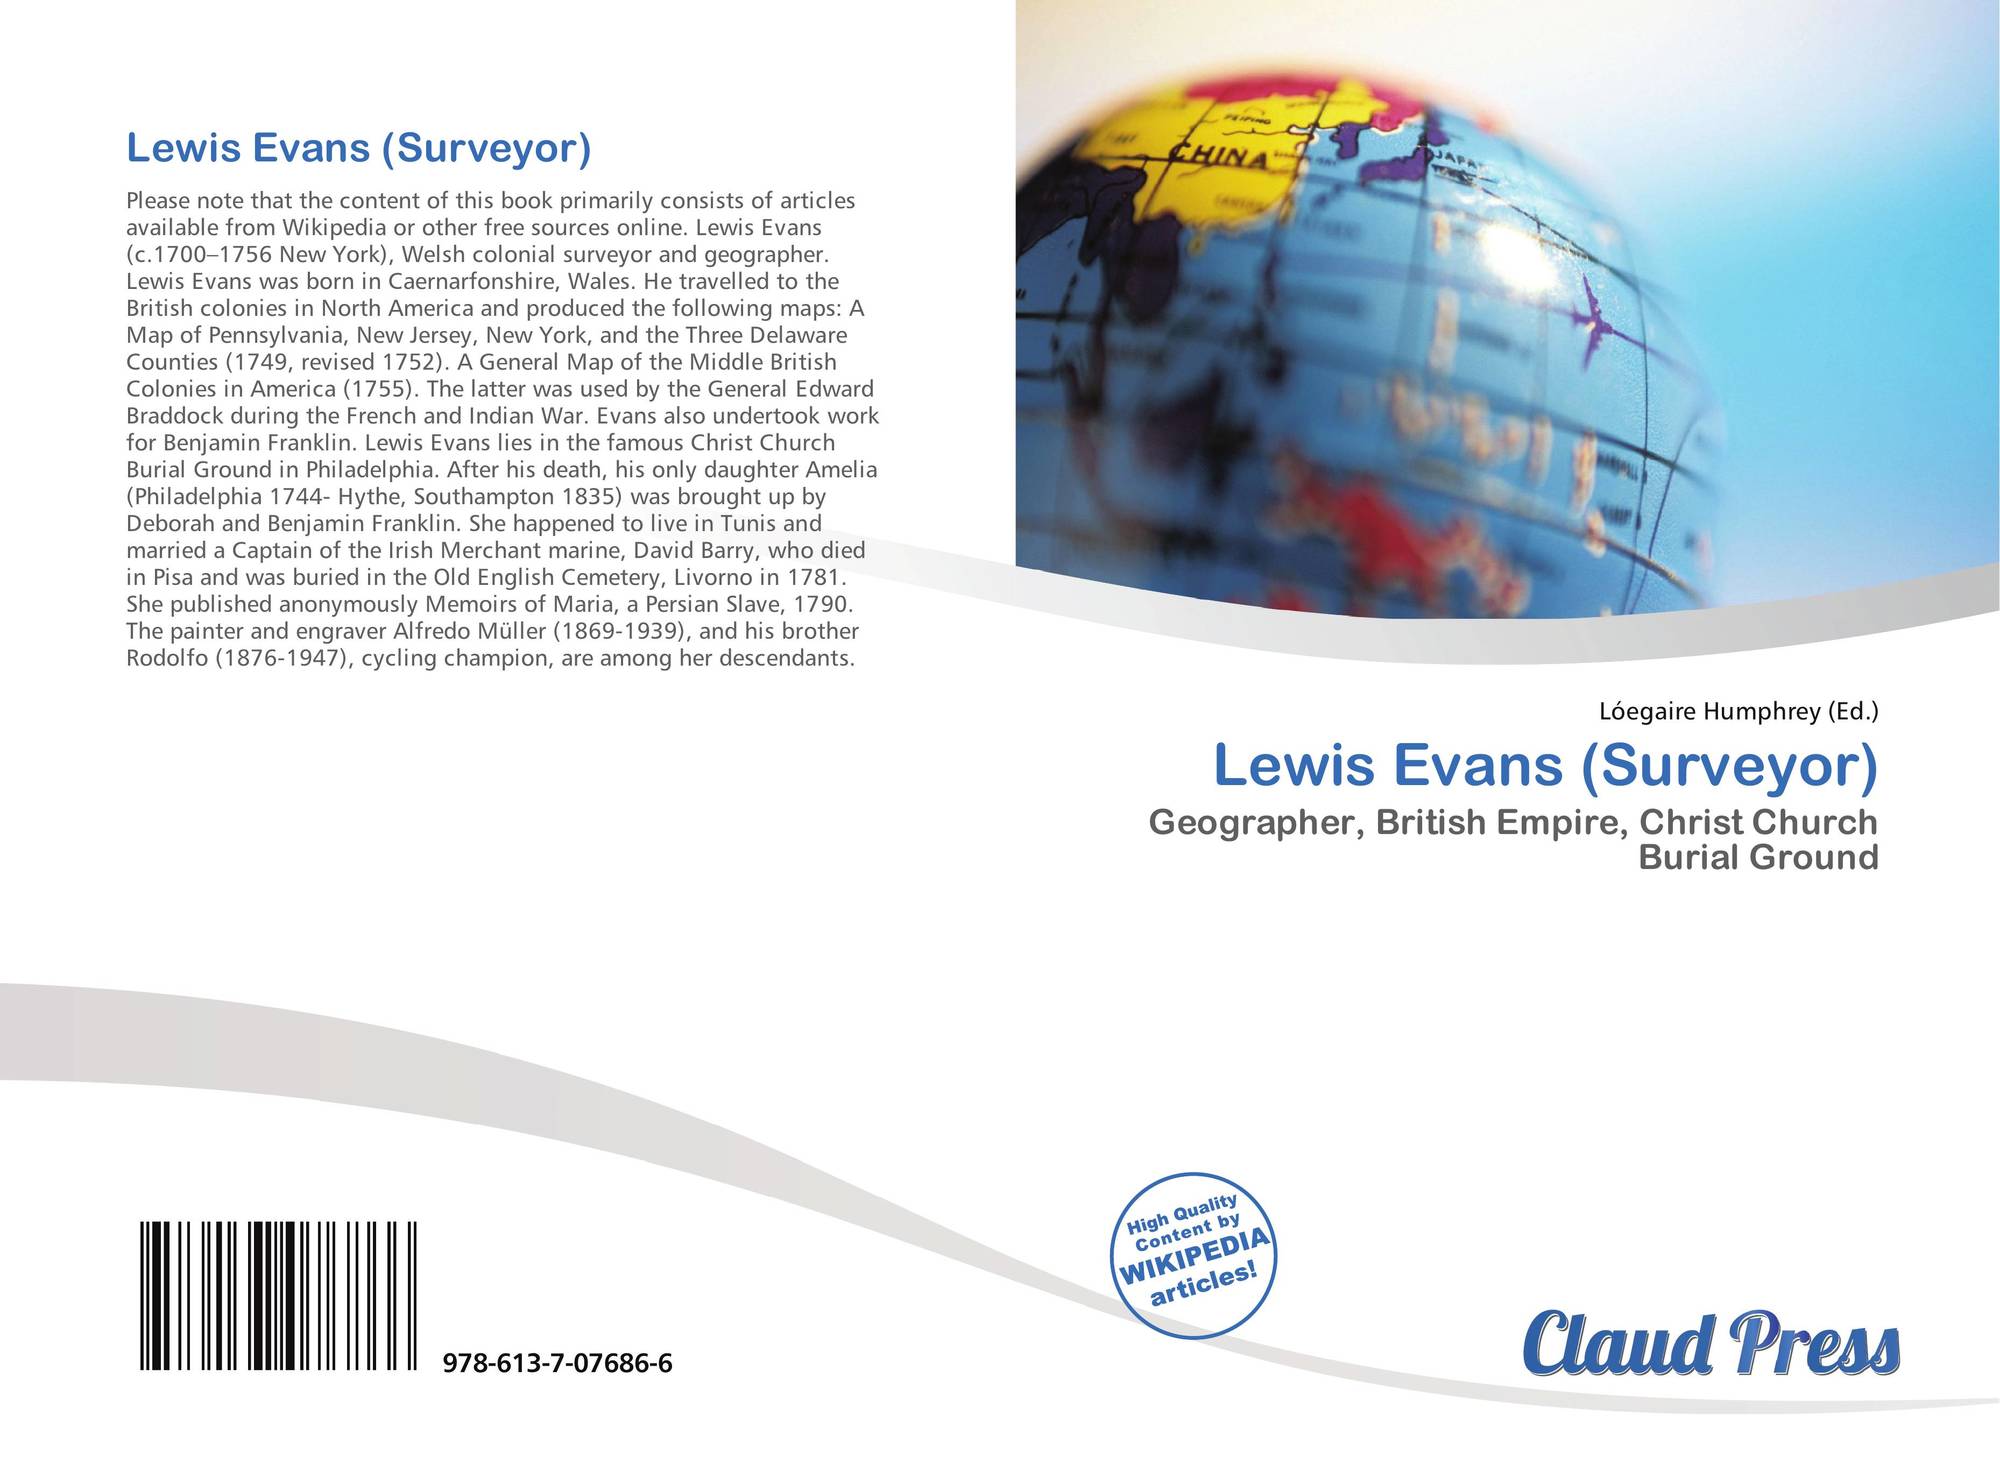 Search Results For Surveyor - bookcover of lewis evans surveyor omni badge 9307e2201e5f762643a64561af3456be64a87707602f96b92ef18a9bbcada116